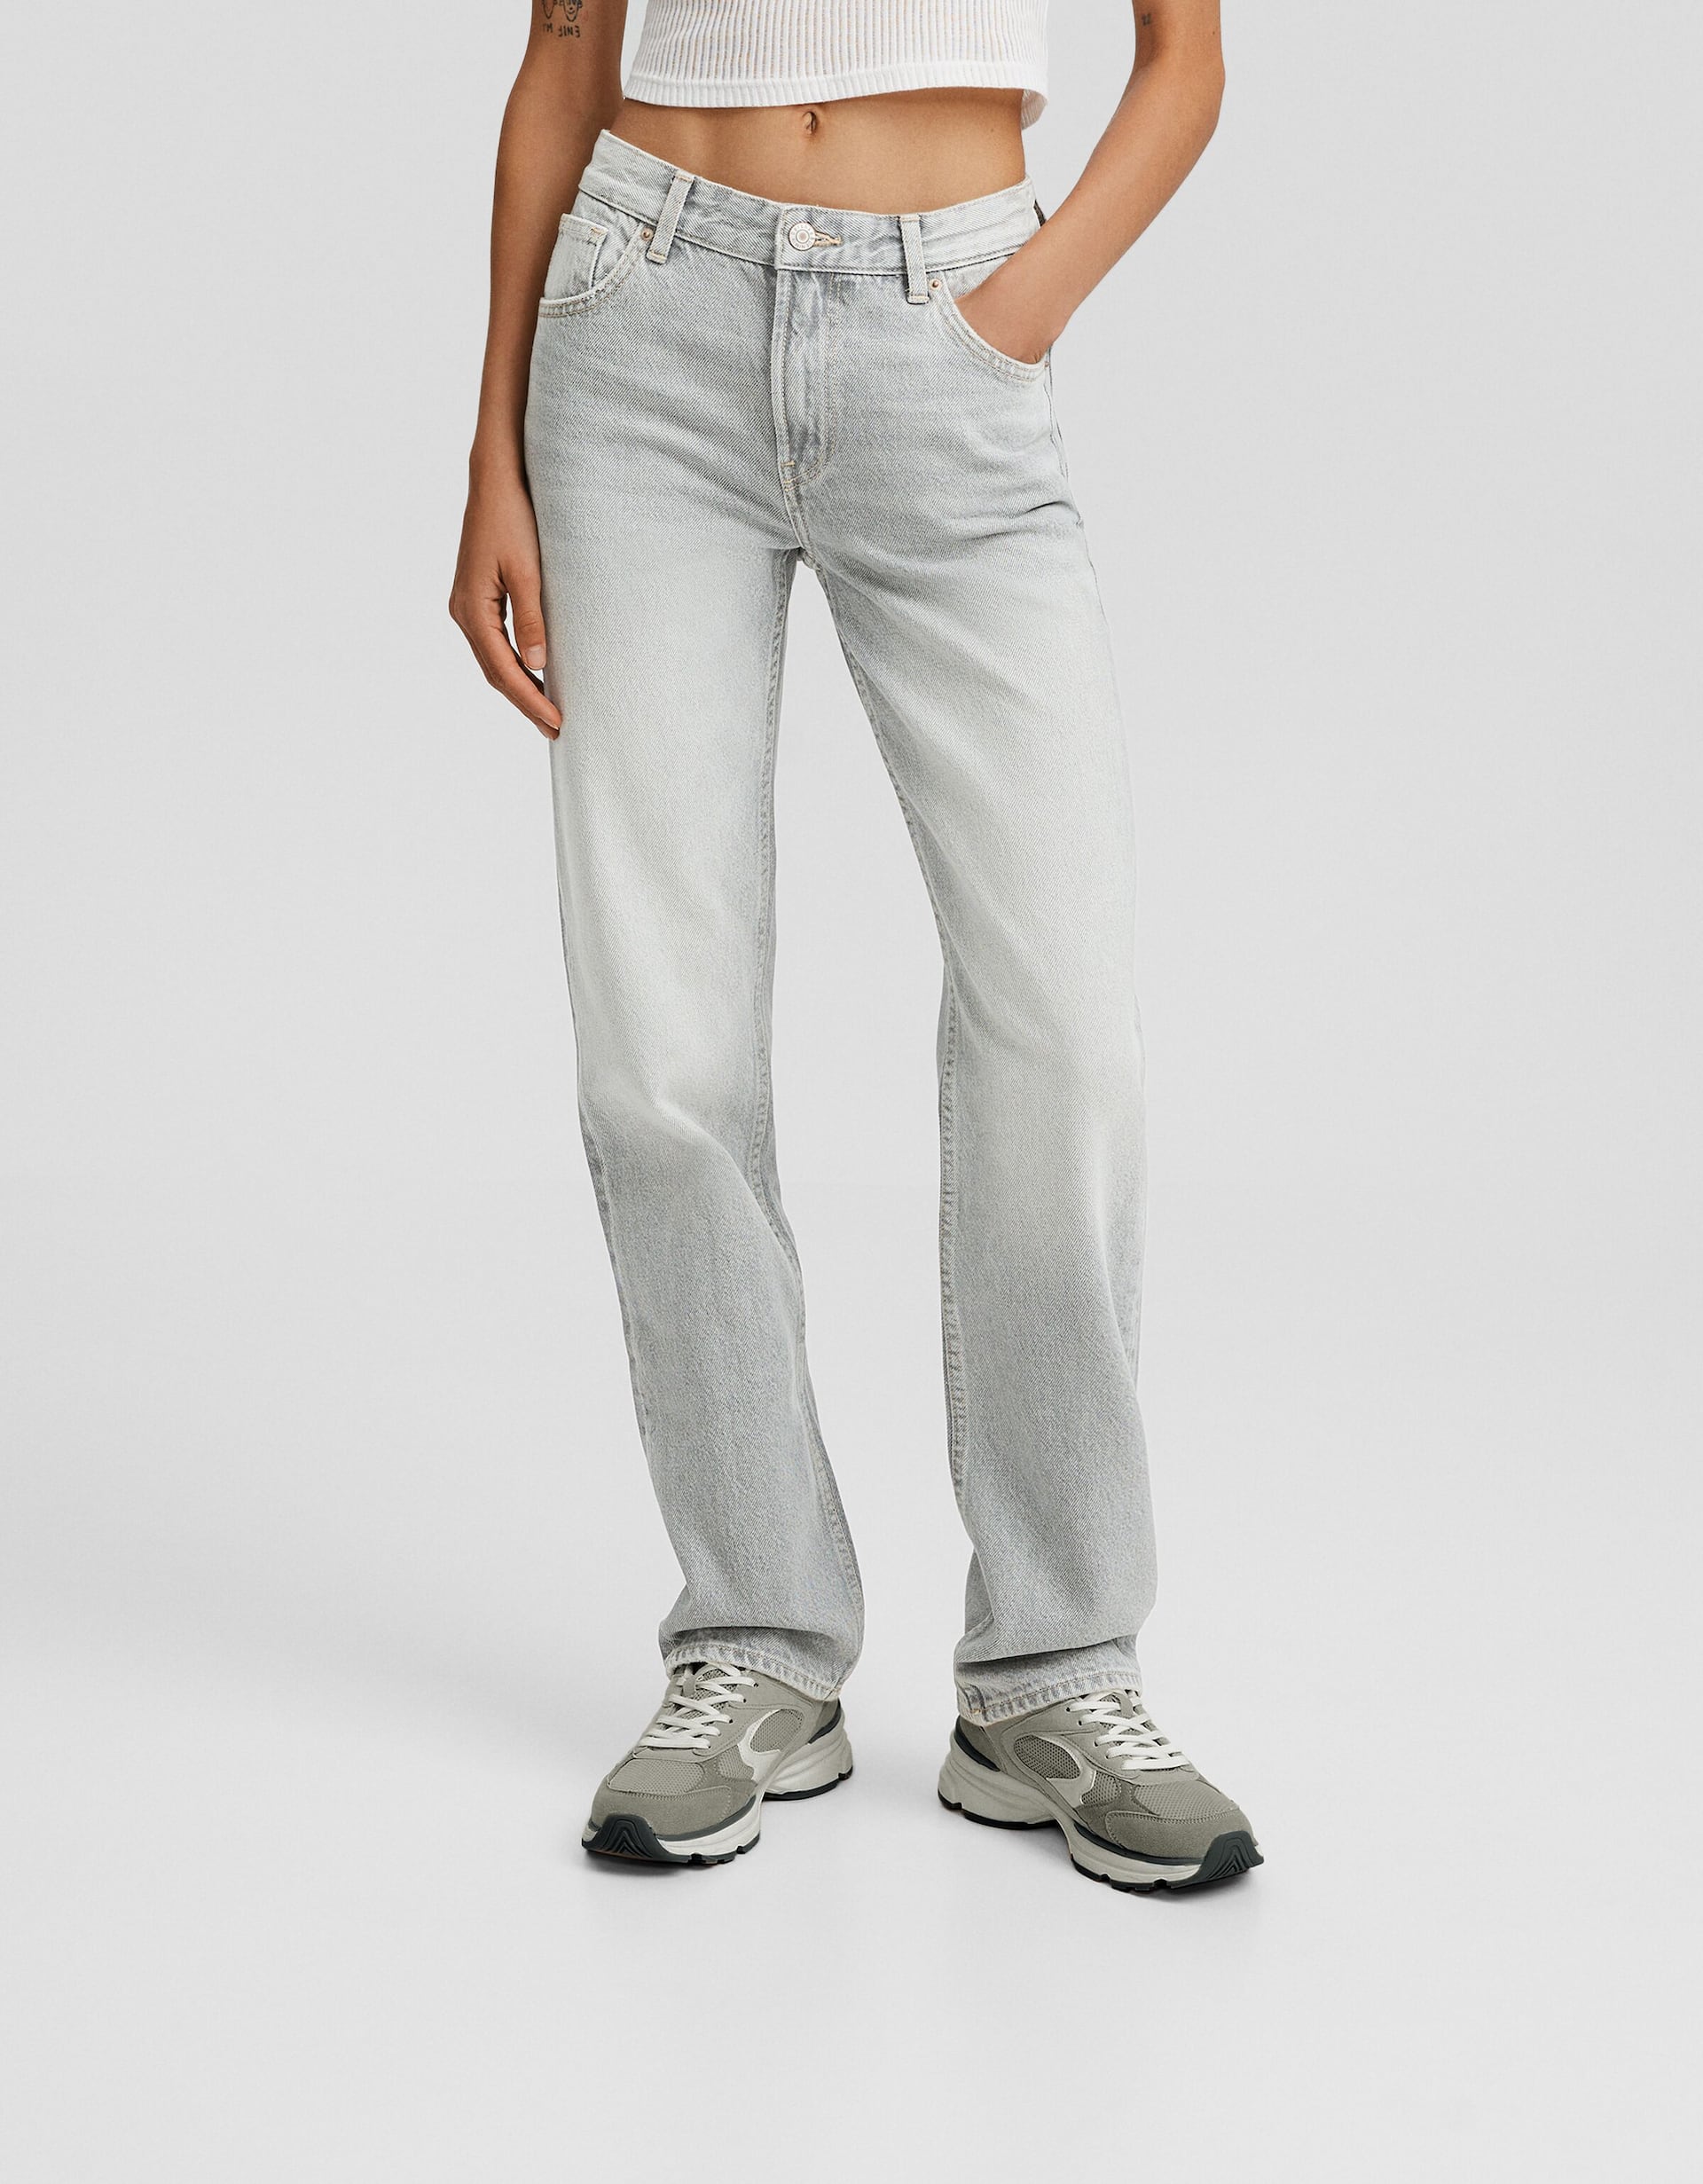 Grey Mom Jeans (Frayed Hem) lessthan1thousand